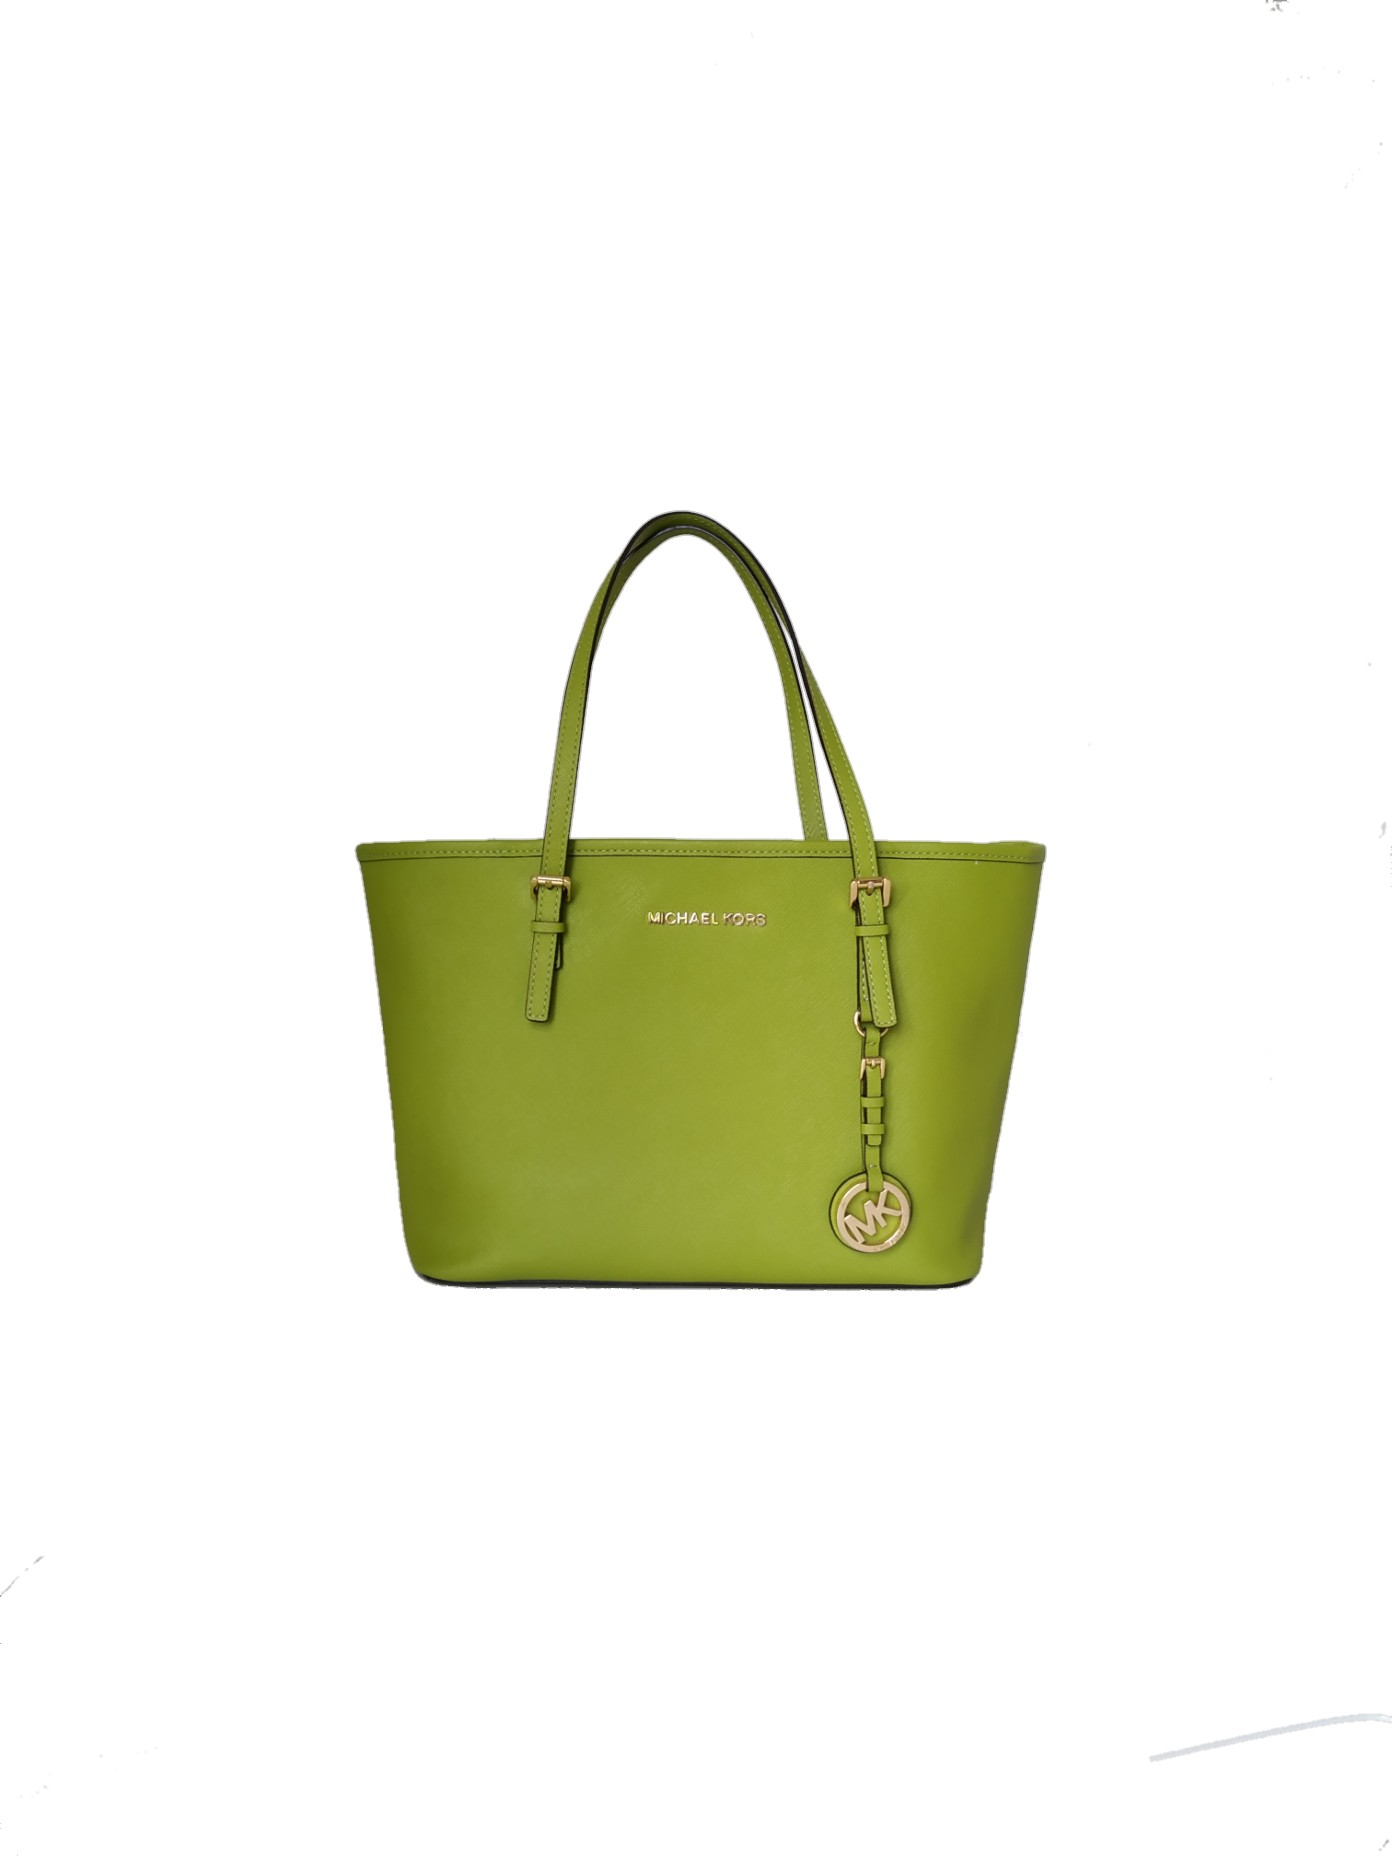 Green Michael Kors Bag 